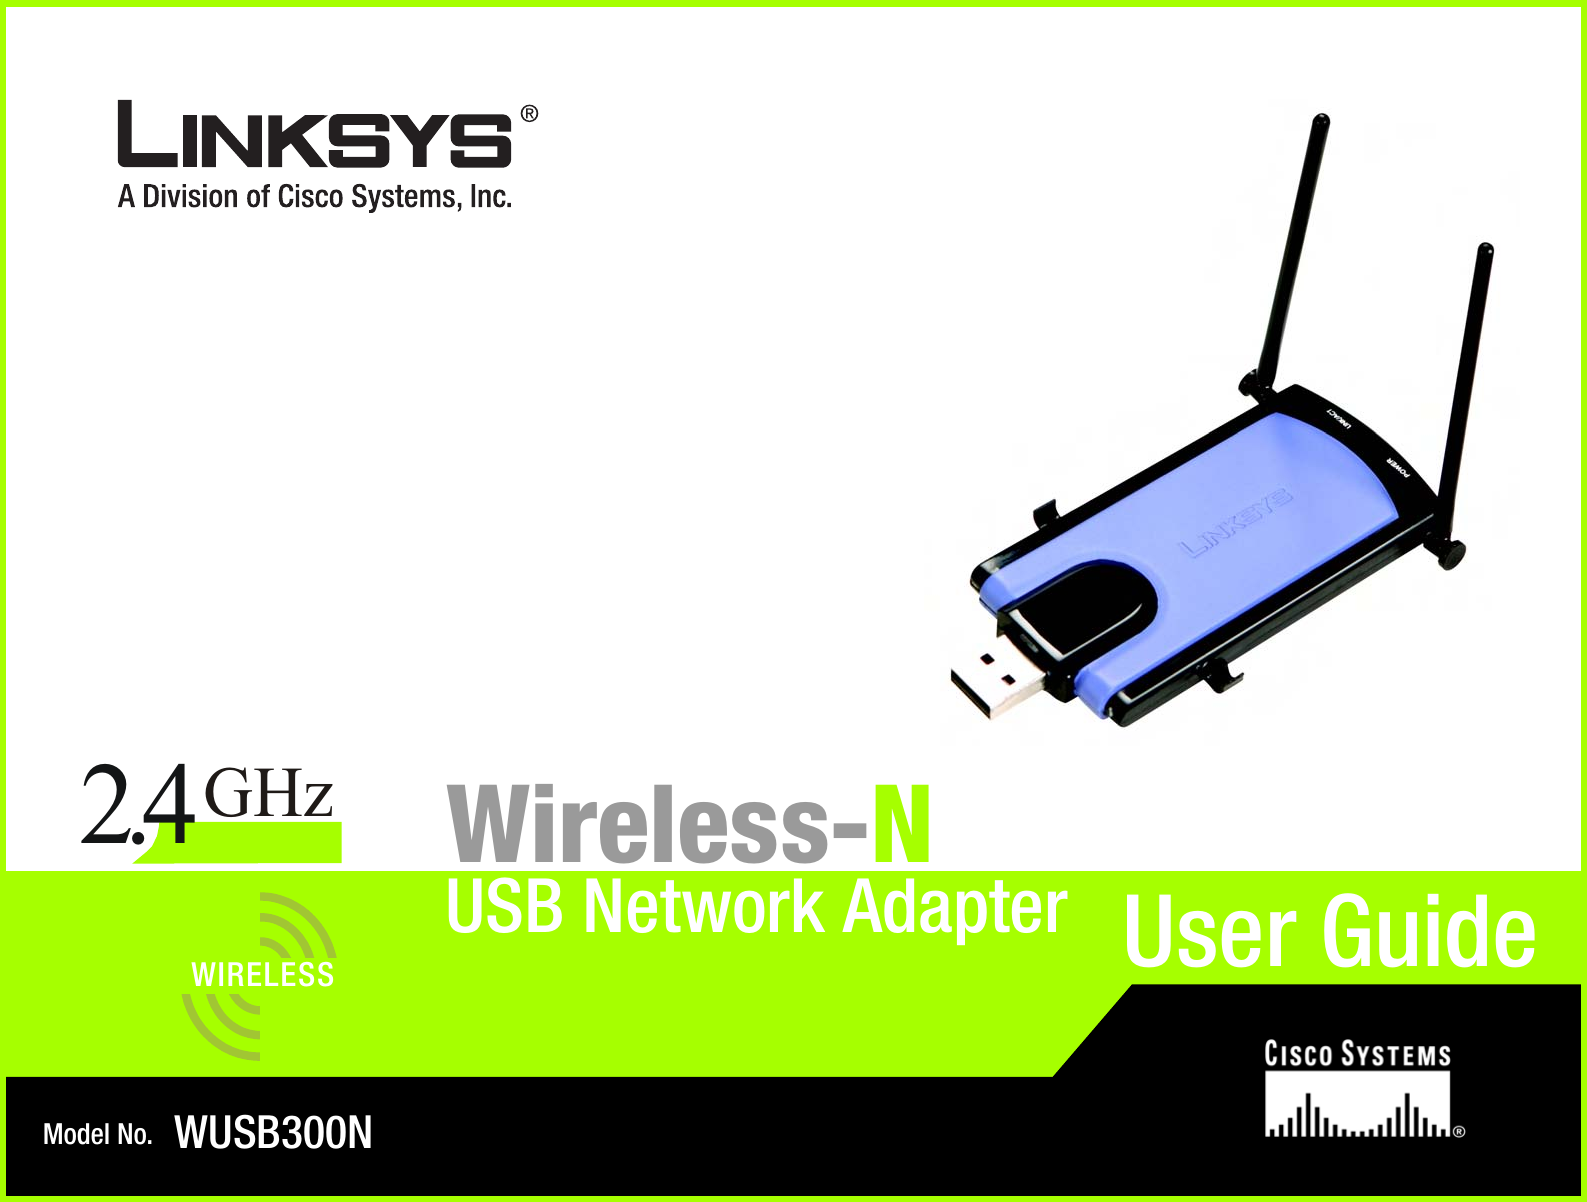 Model No.USB Network AdapterWireless-NWUSB300NUser GuideWIRELESSGHz2.4